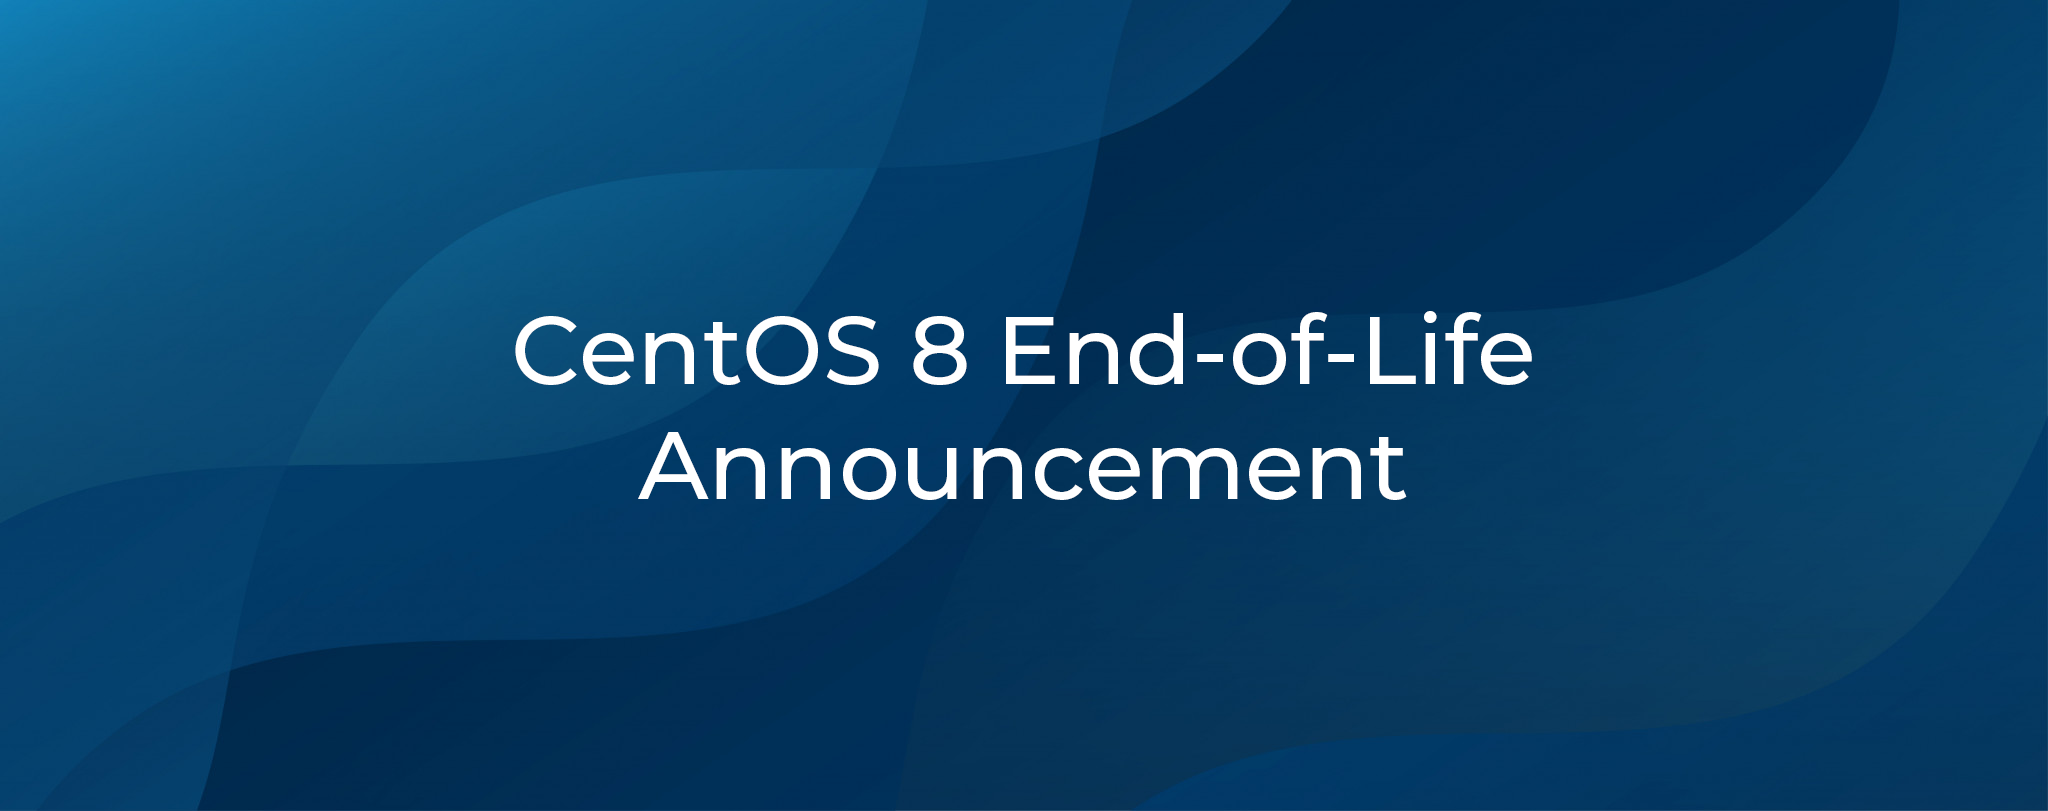 CentOS 8 End-of-Life Announcement